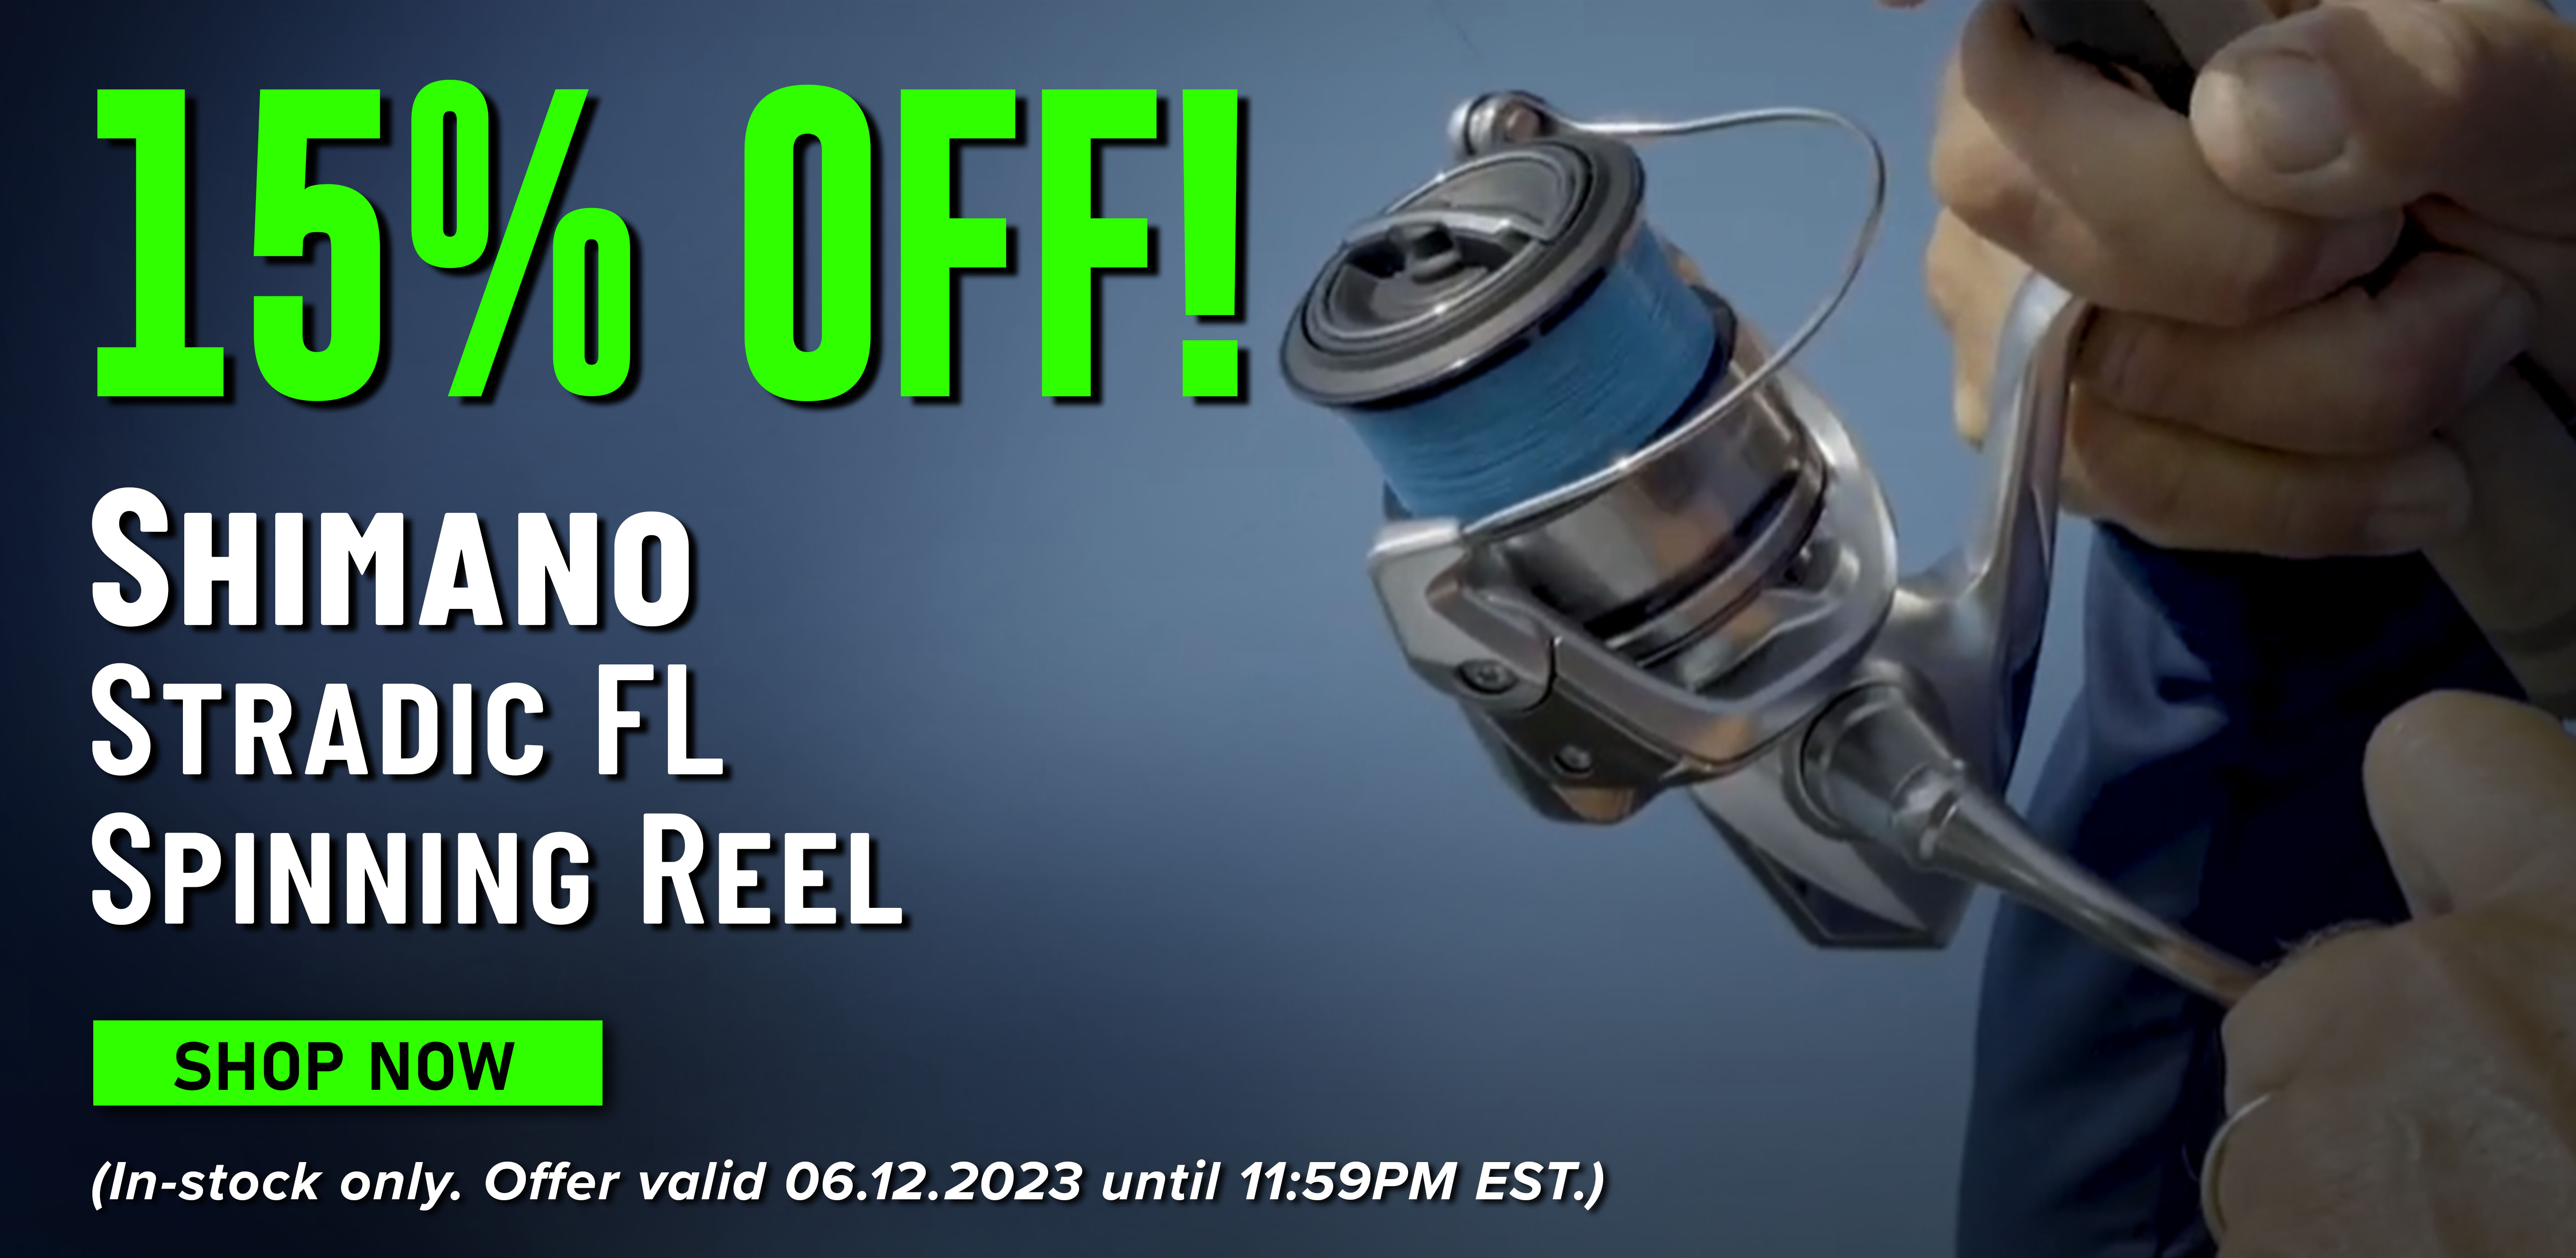 Shimano Stradic Spinning Reels 15% Off! These Won't Last Long! - Fish USA